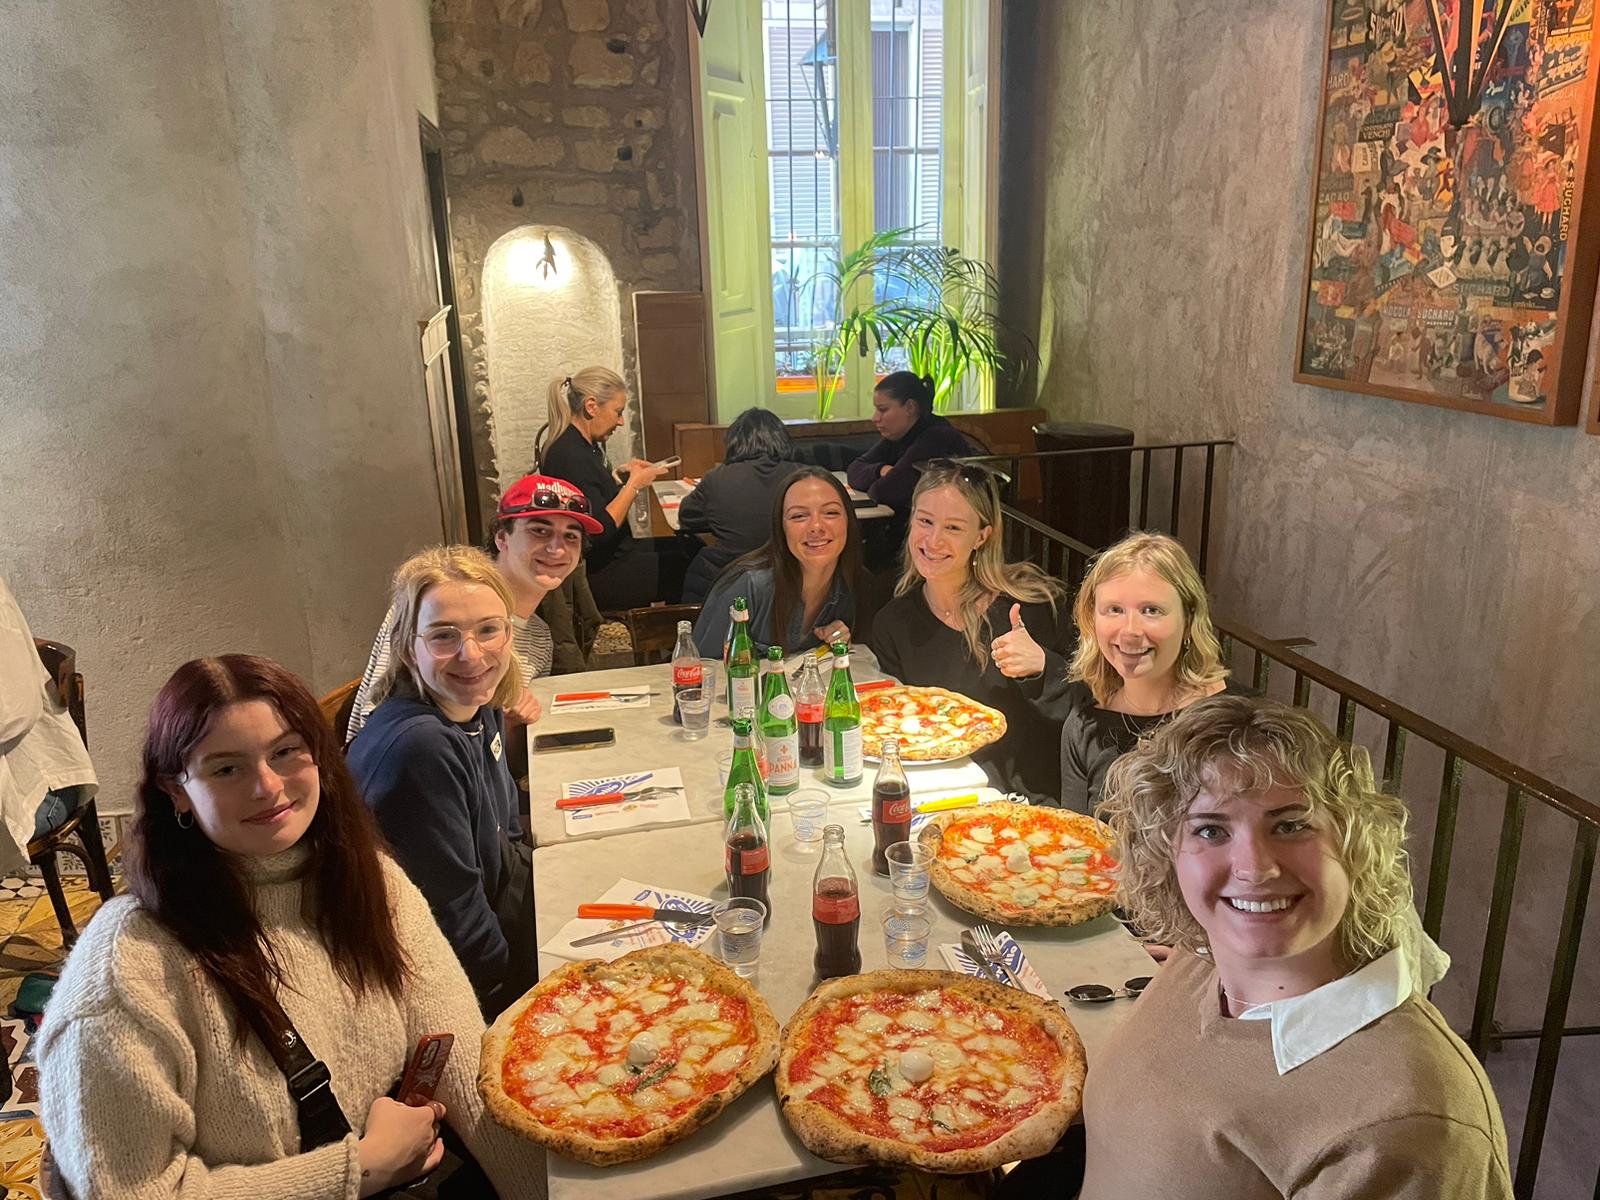 Students enjoying an Italian meal